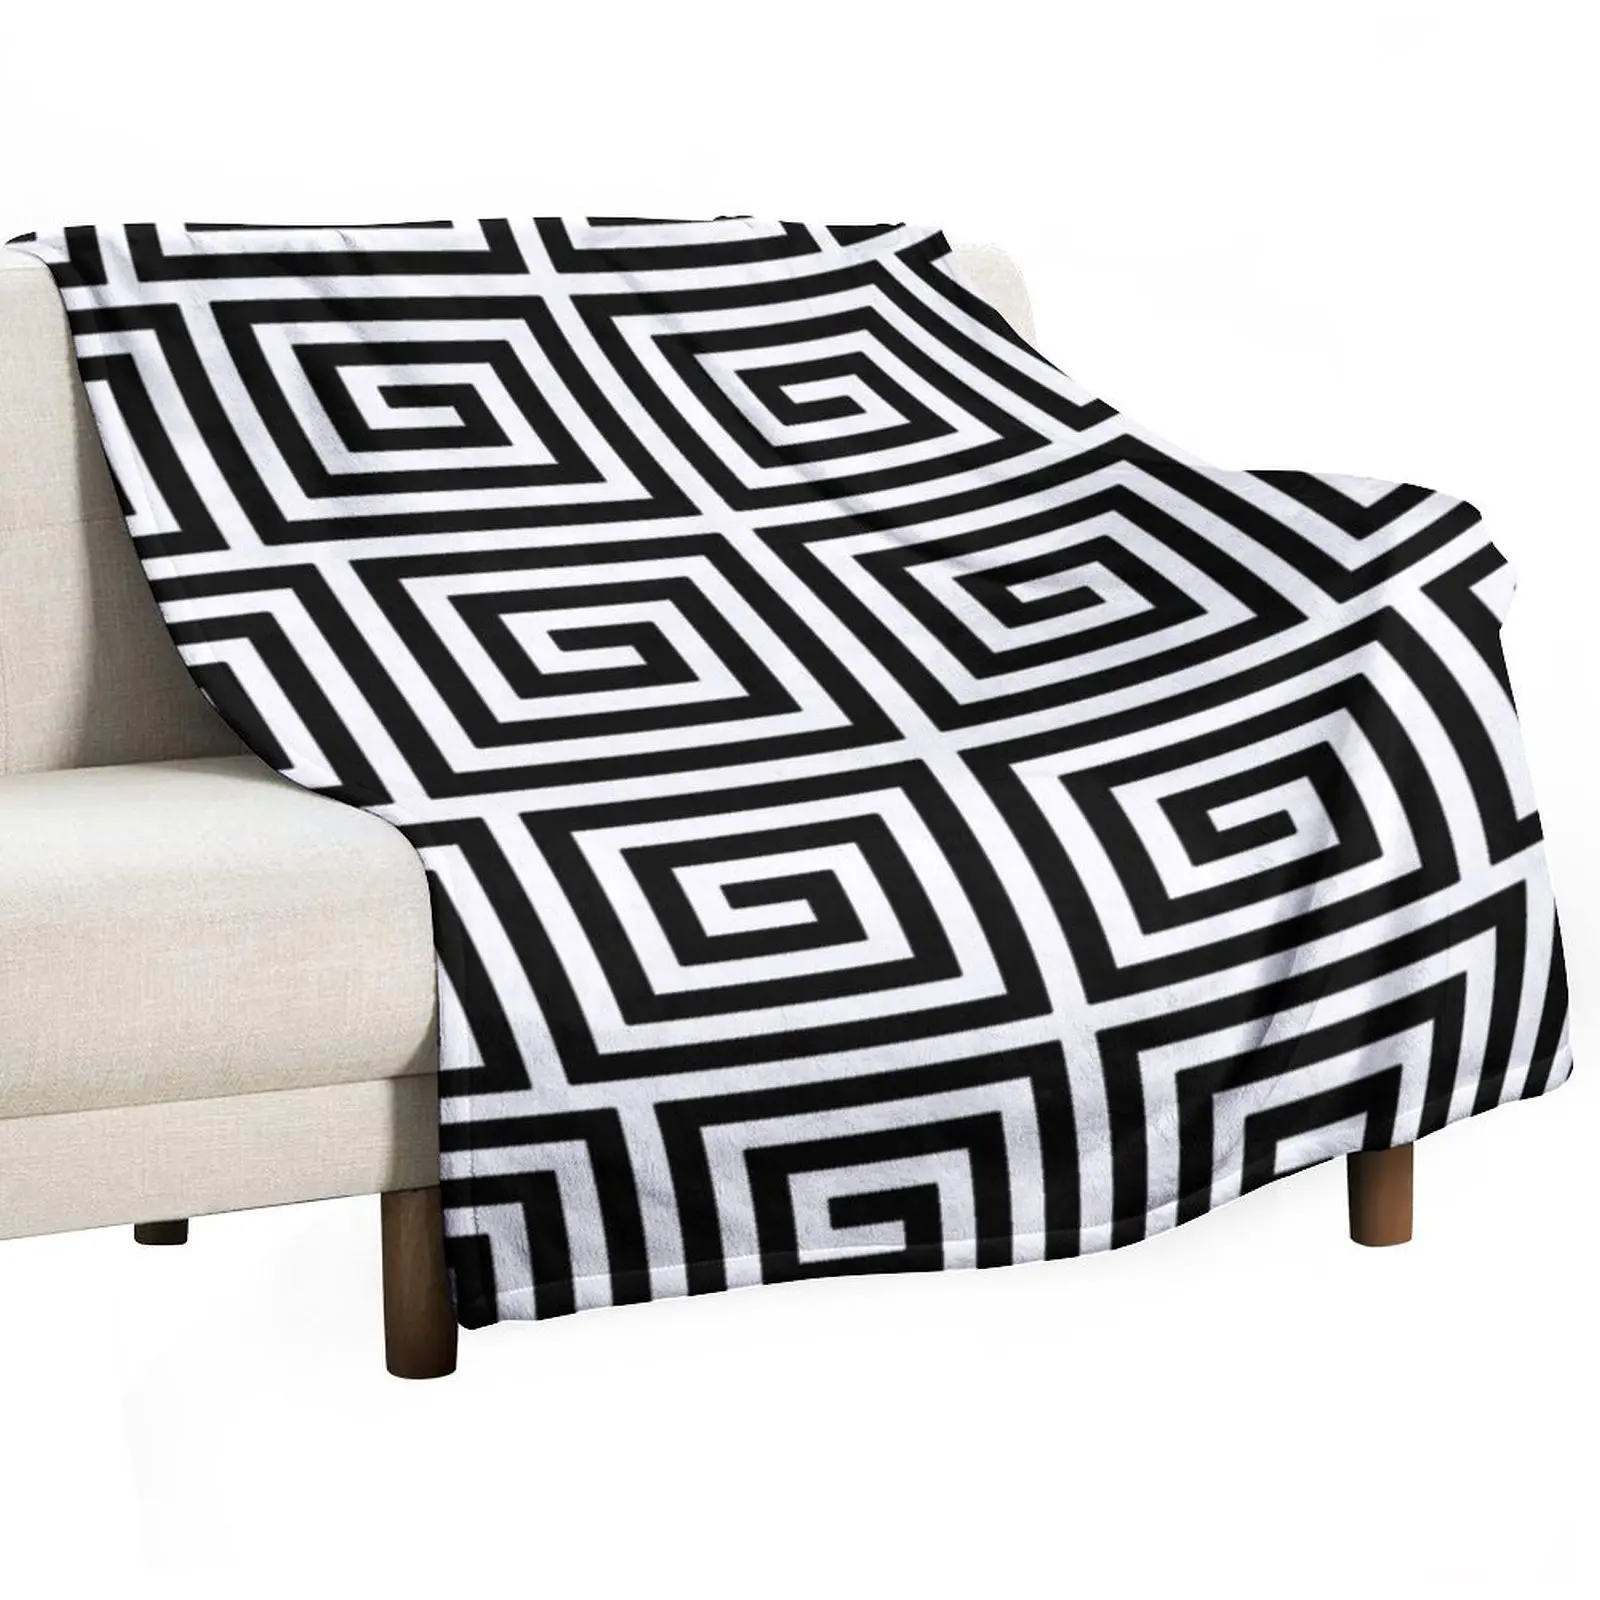 

Greek Key Pattern 122 Black and White Throw Blanket Plaid on the sofa Luxury Brand Personalized Gift Sofa Throw Blankets